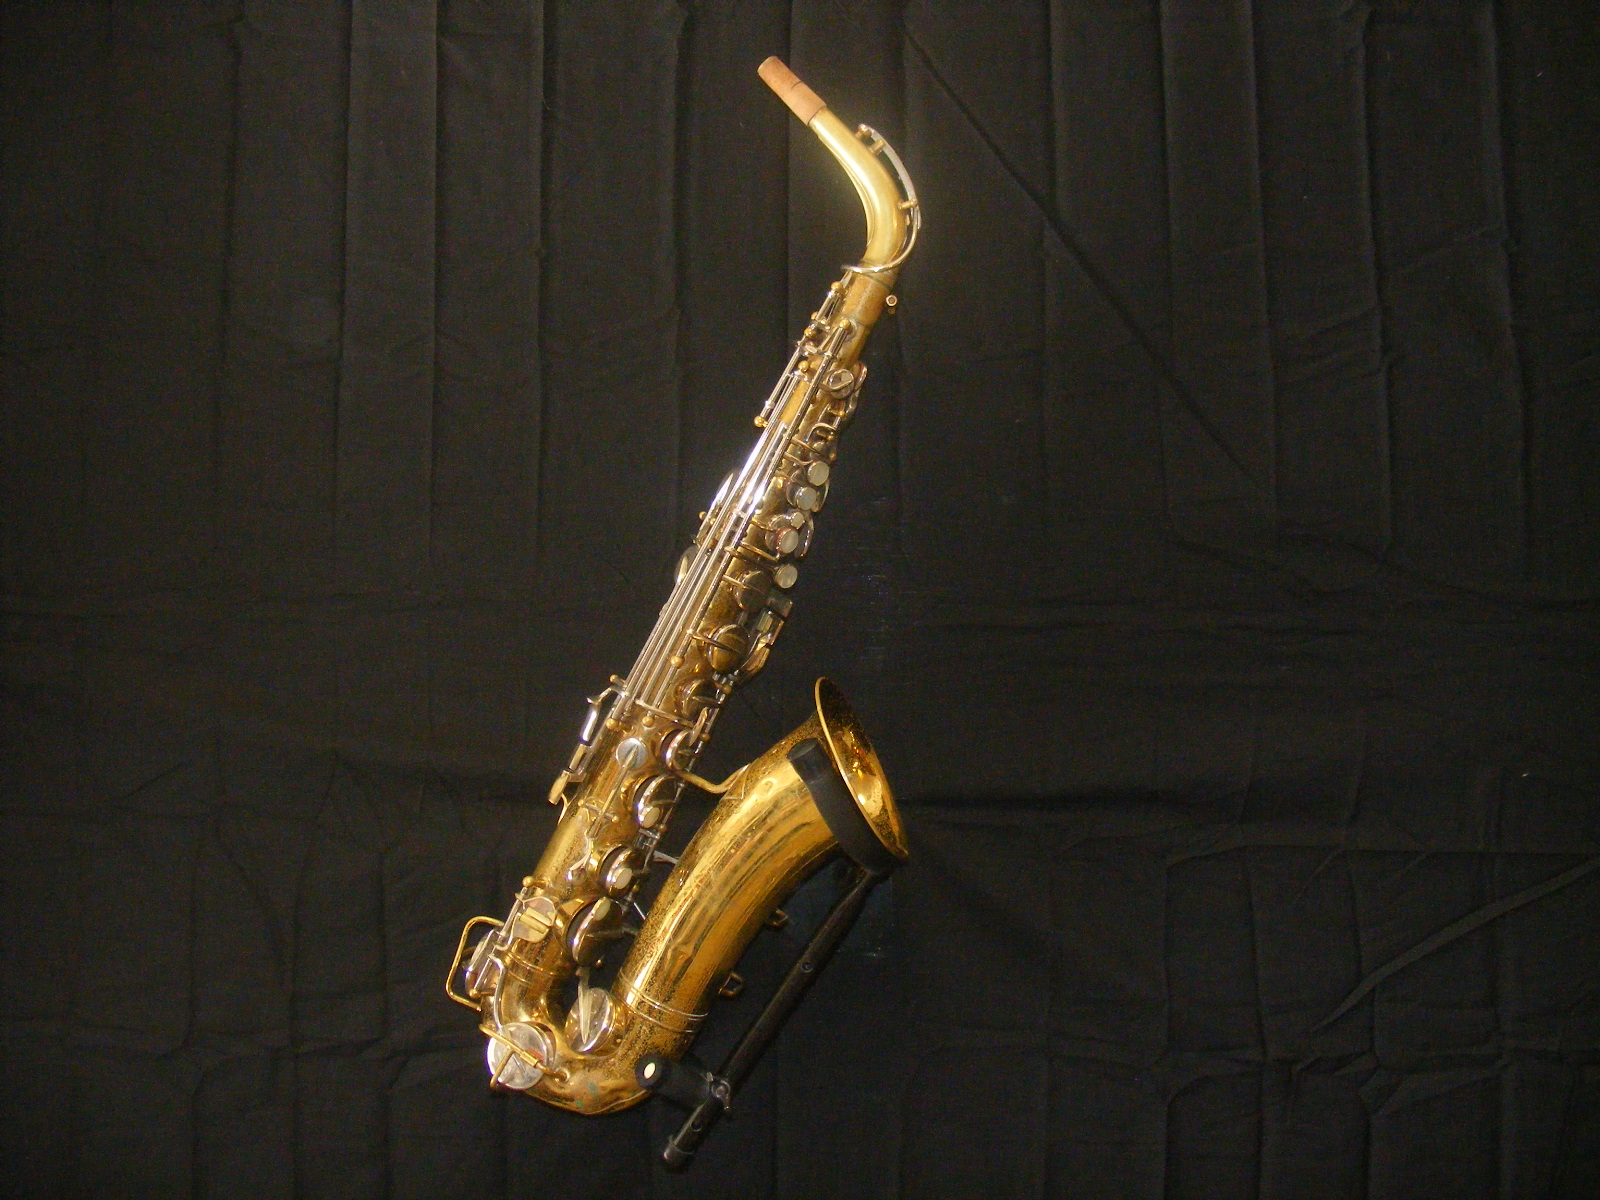 46+] Alto Saxophone Wallpaper - WallpaperSafari